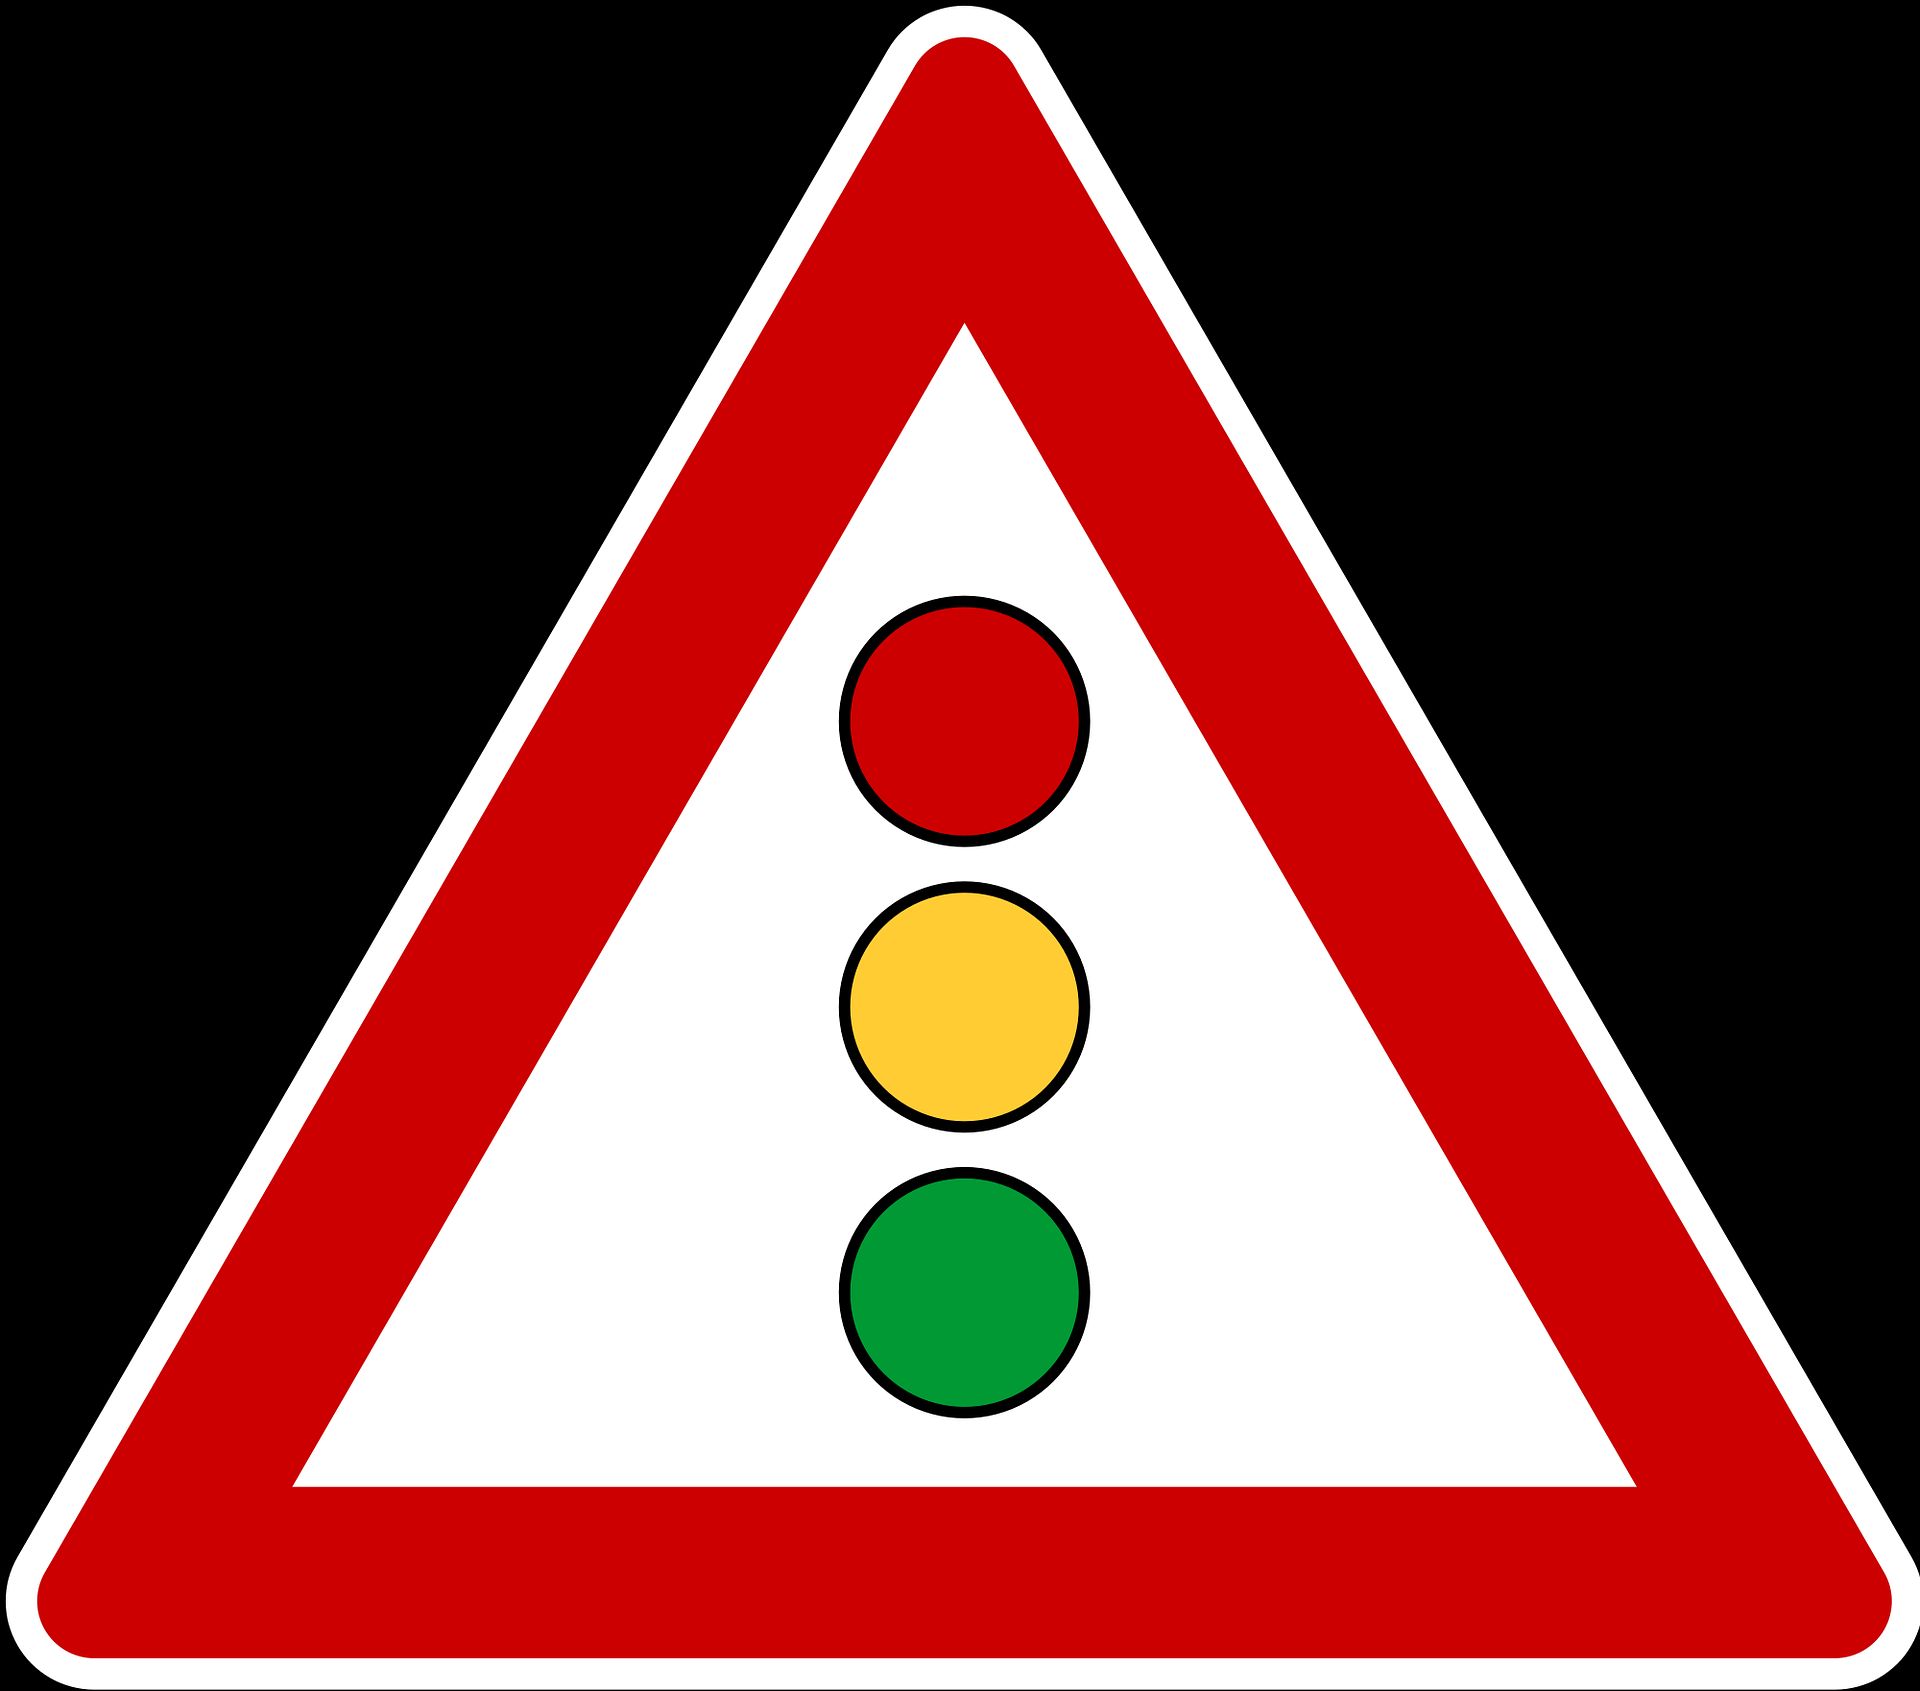 Sign traffic light #4